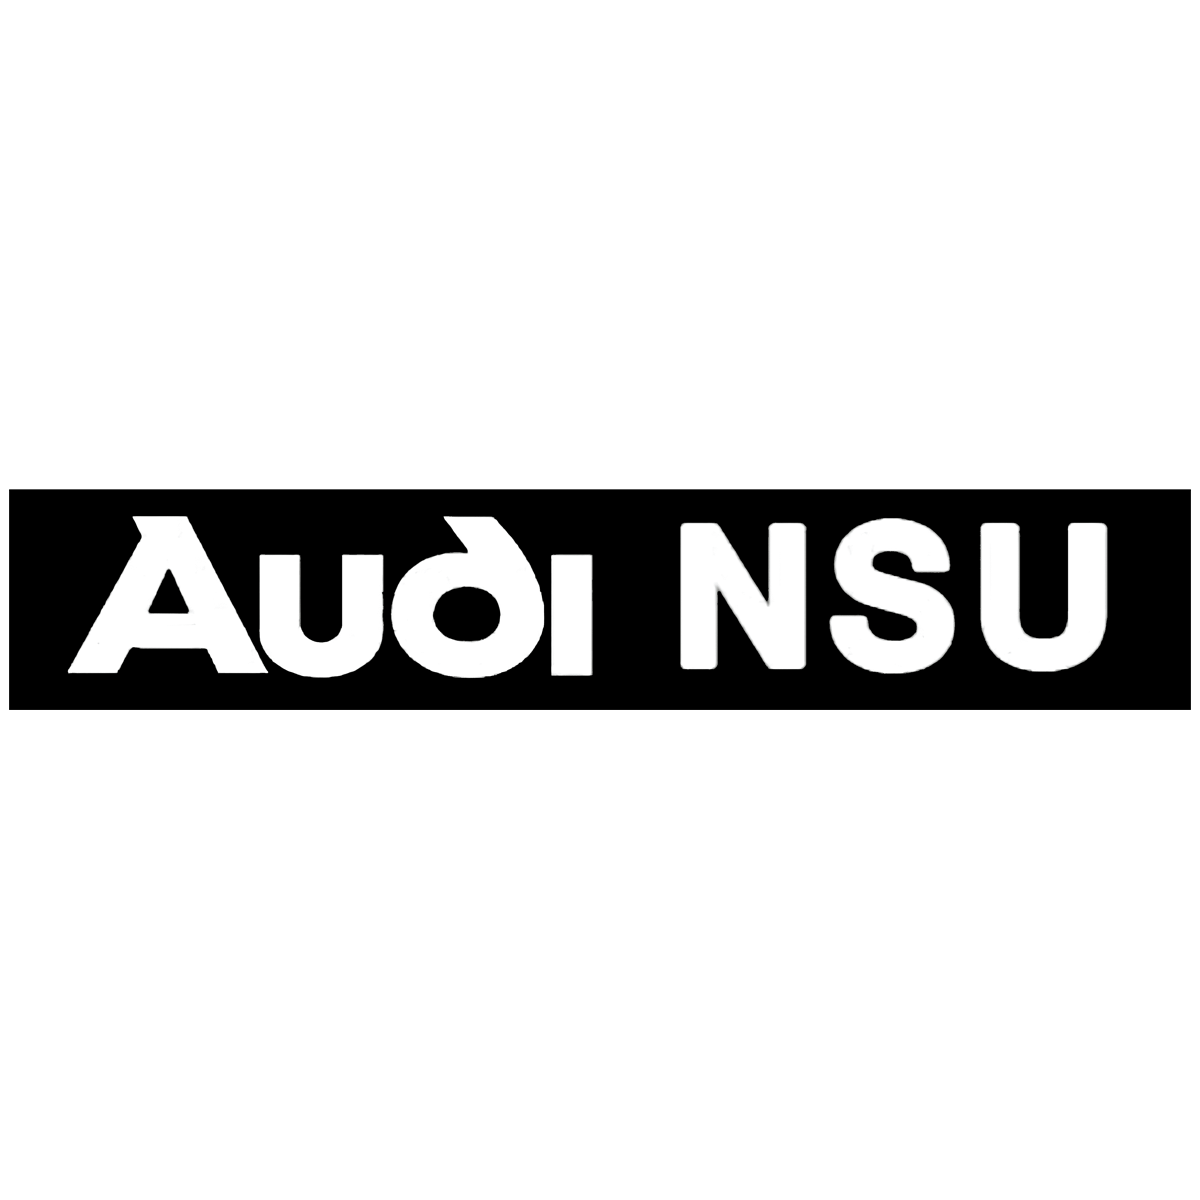 Audi NSU Logo 1969 PNG